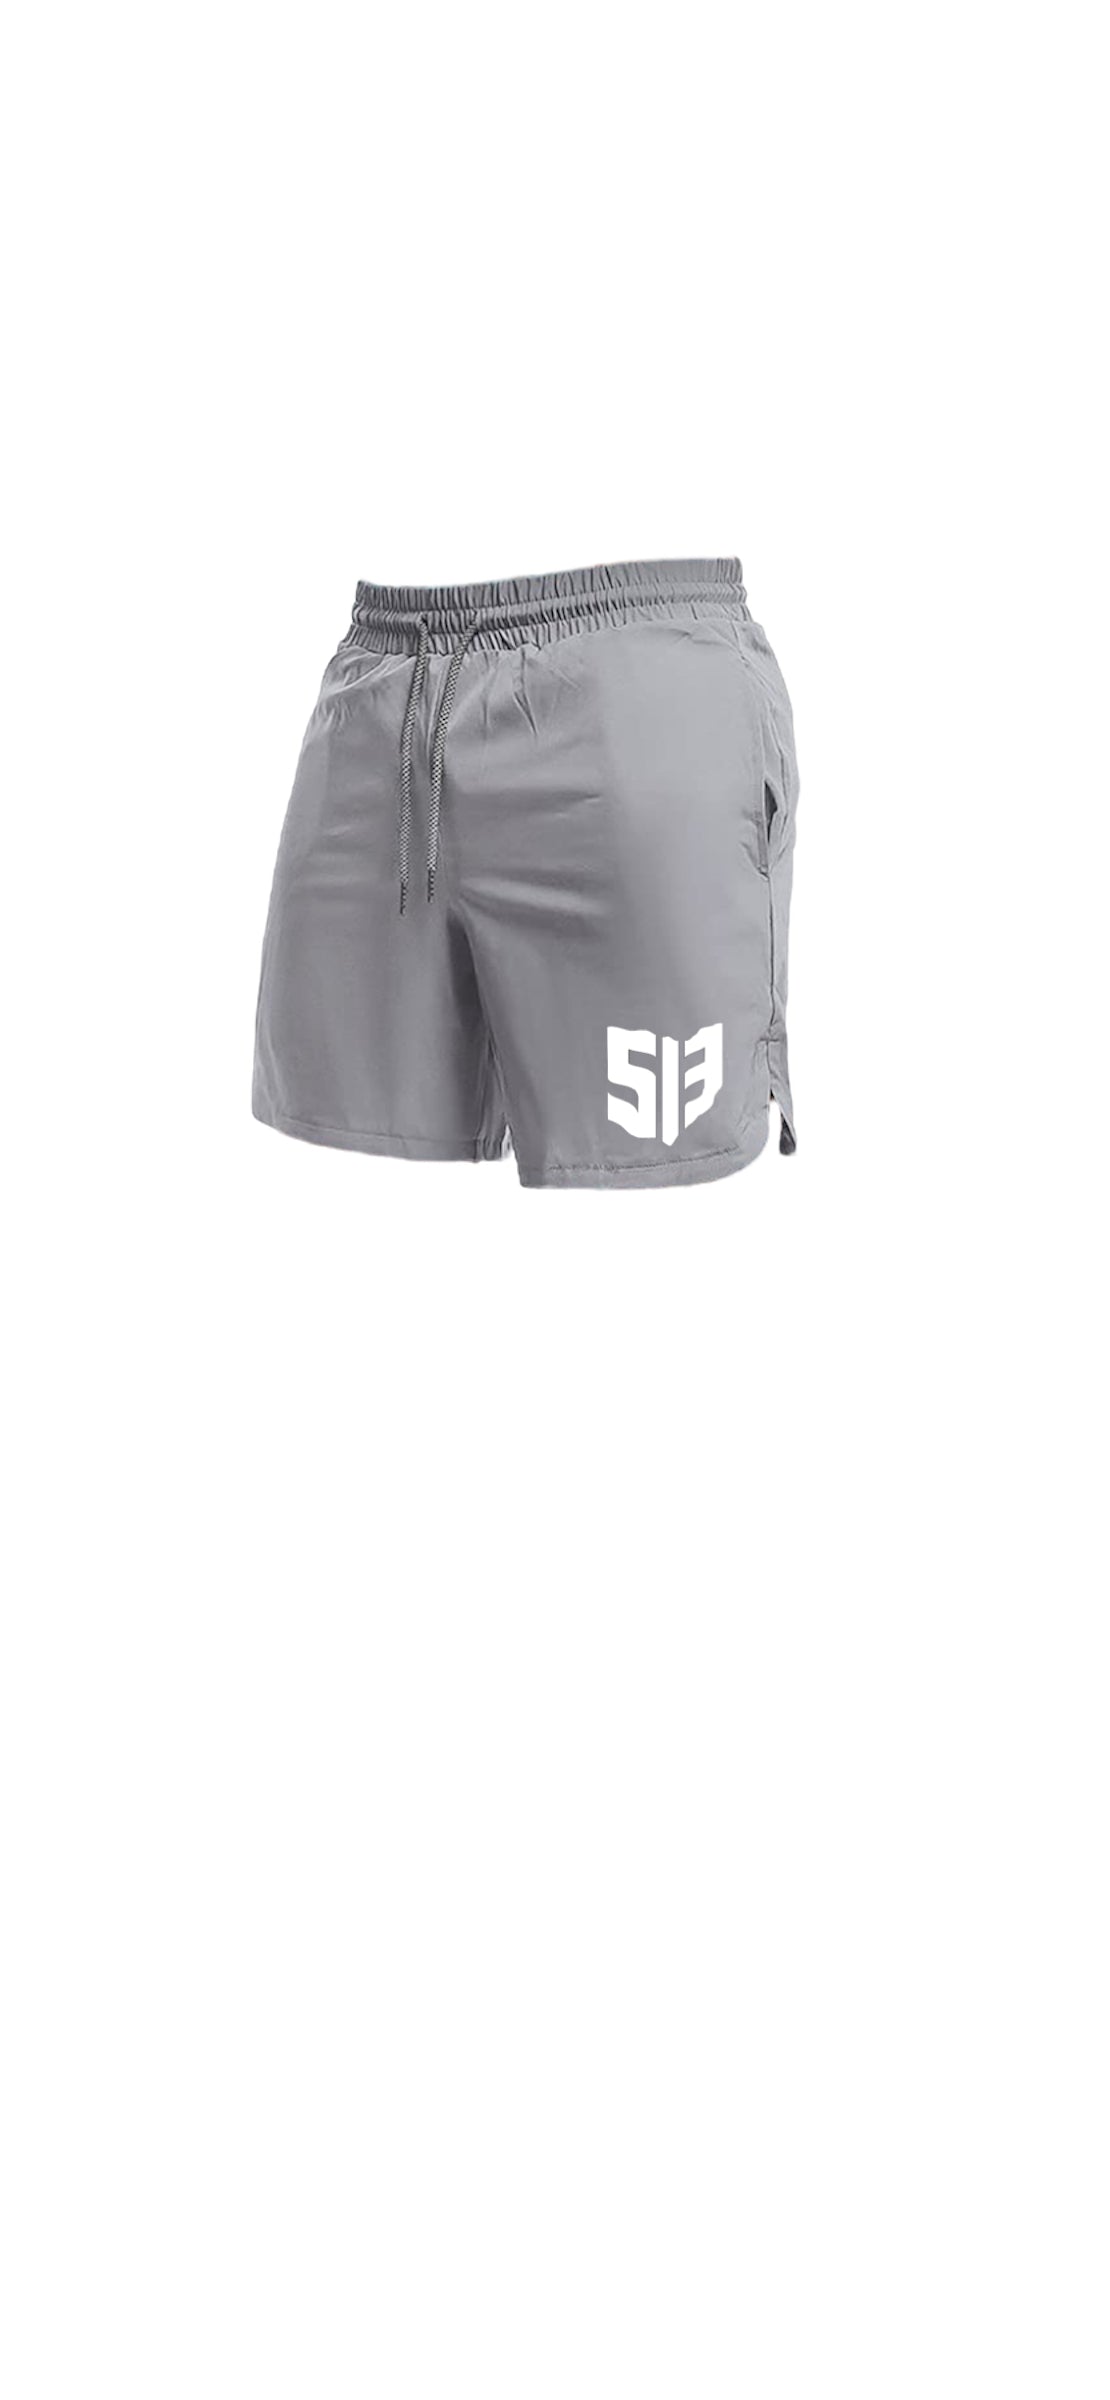 Men’s Athletic Shorts